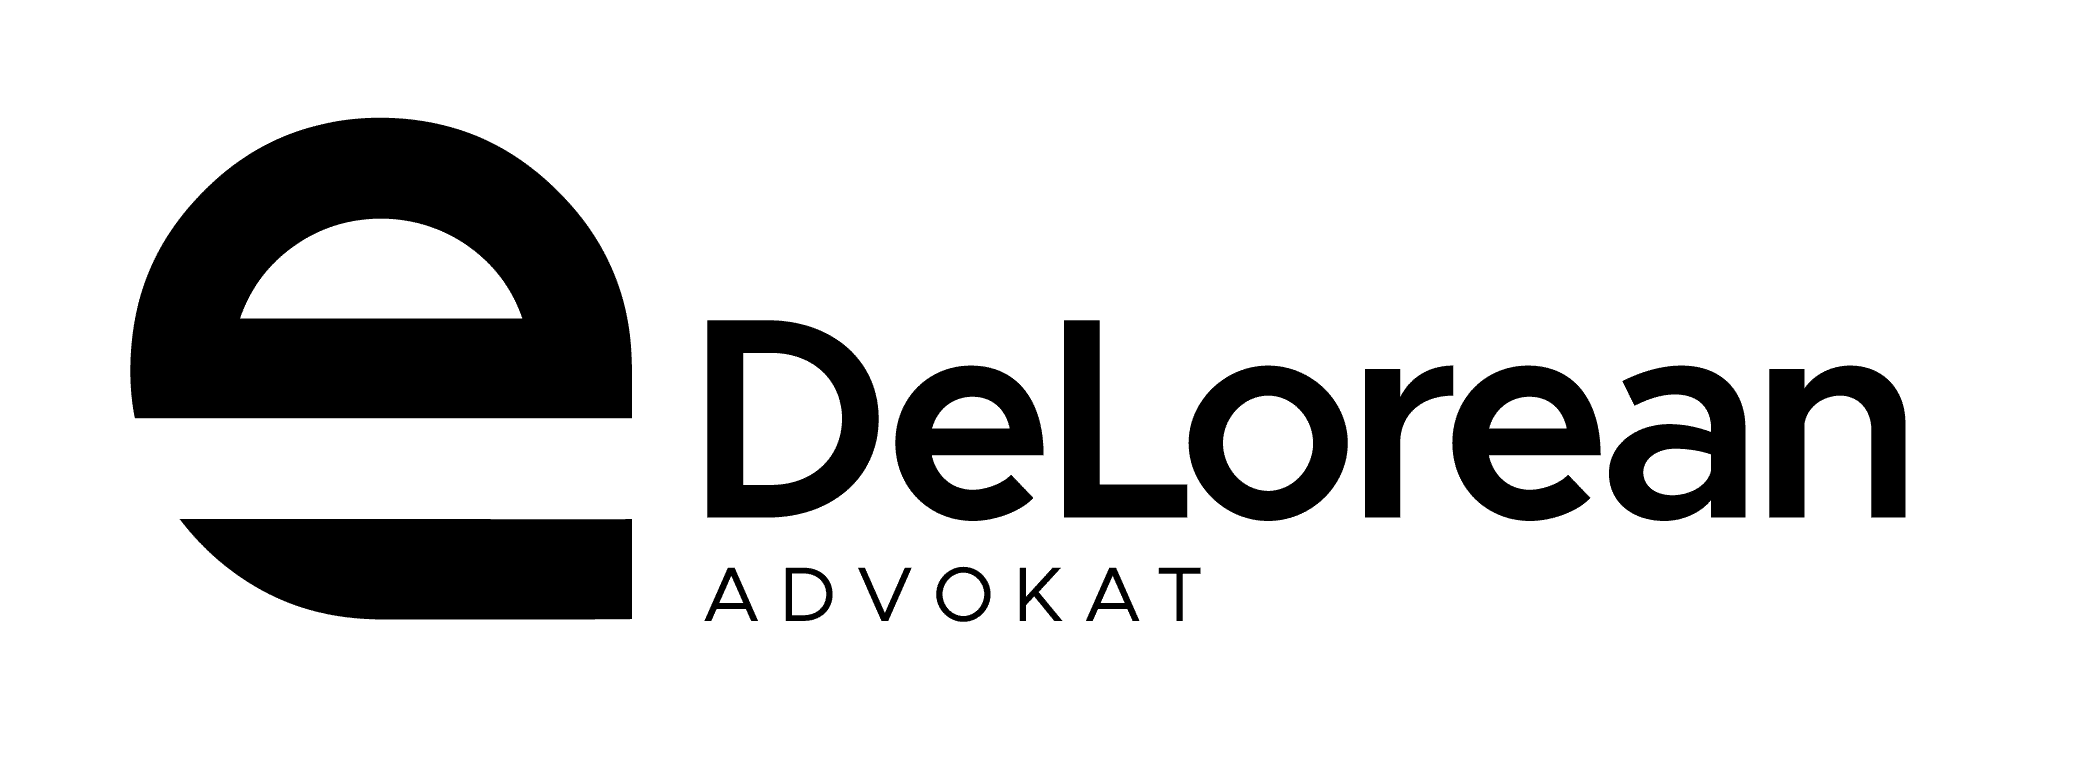 DeLorean Advokat